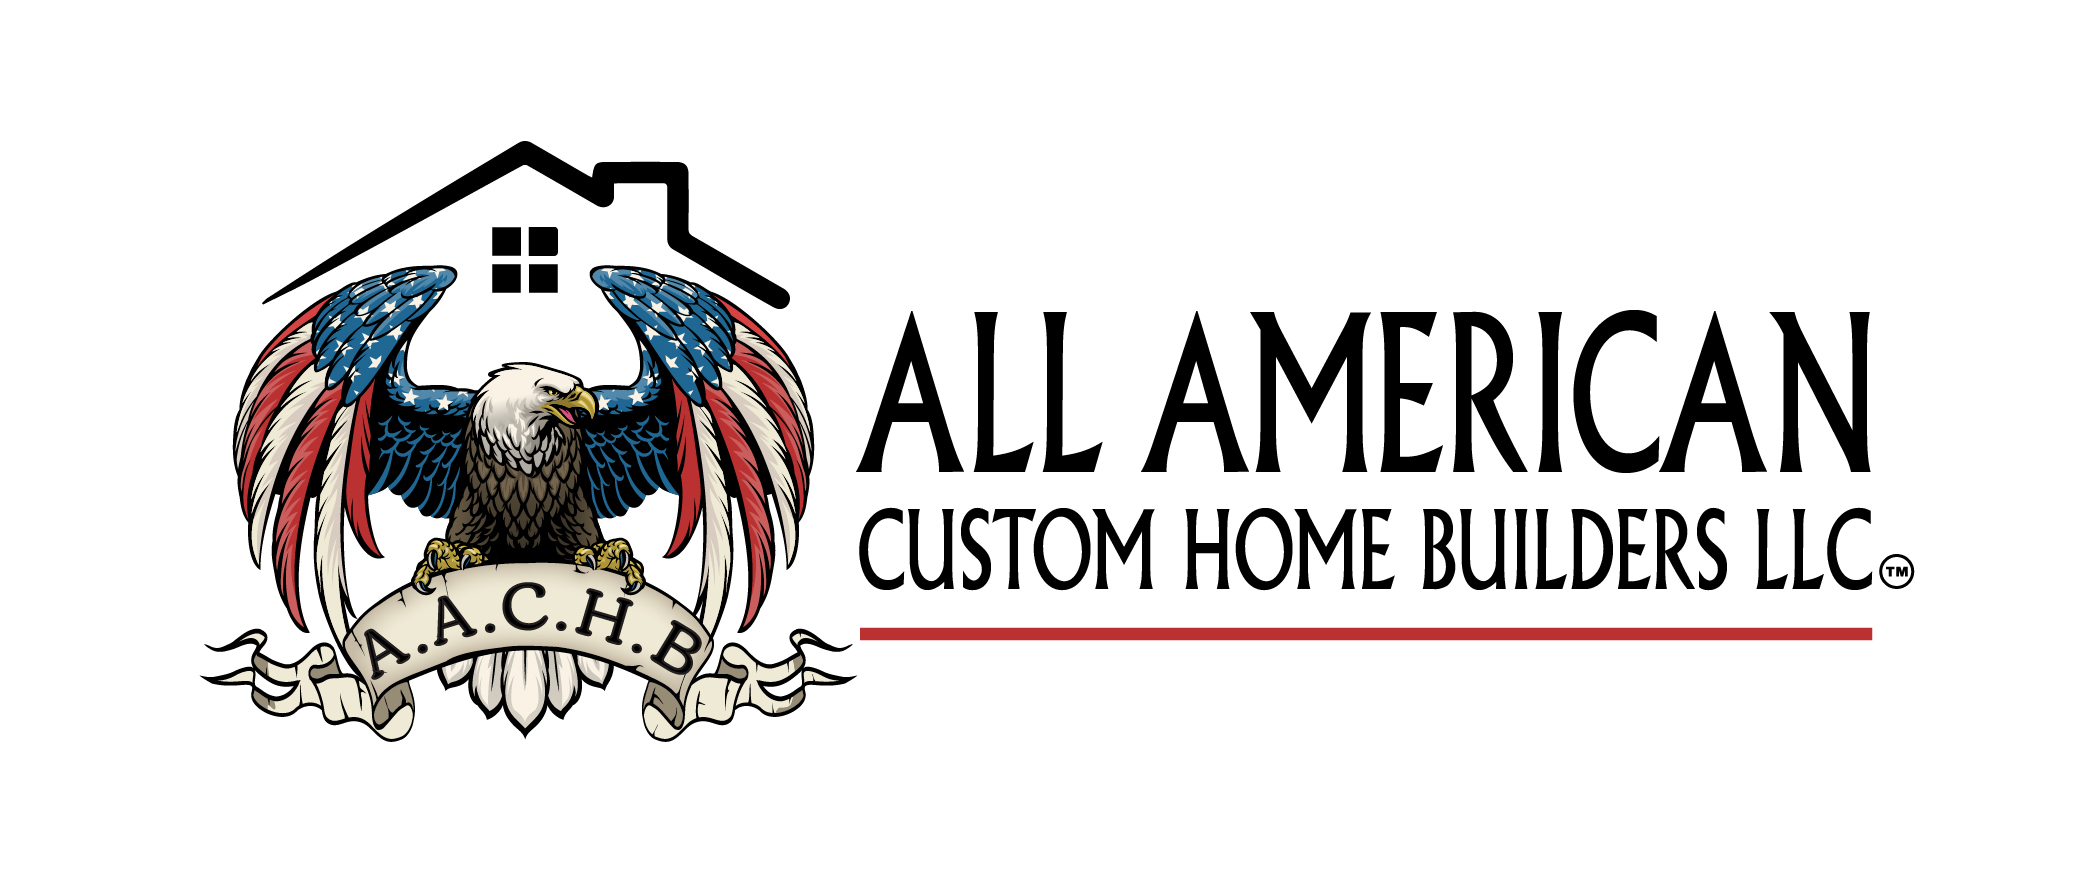 All American Custom Home Builders